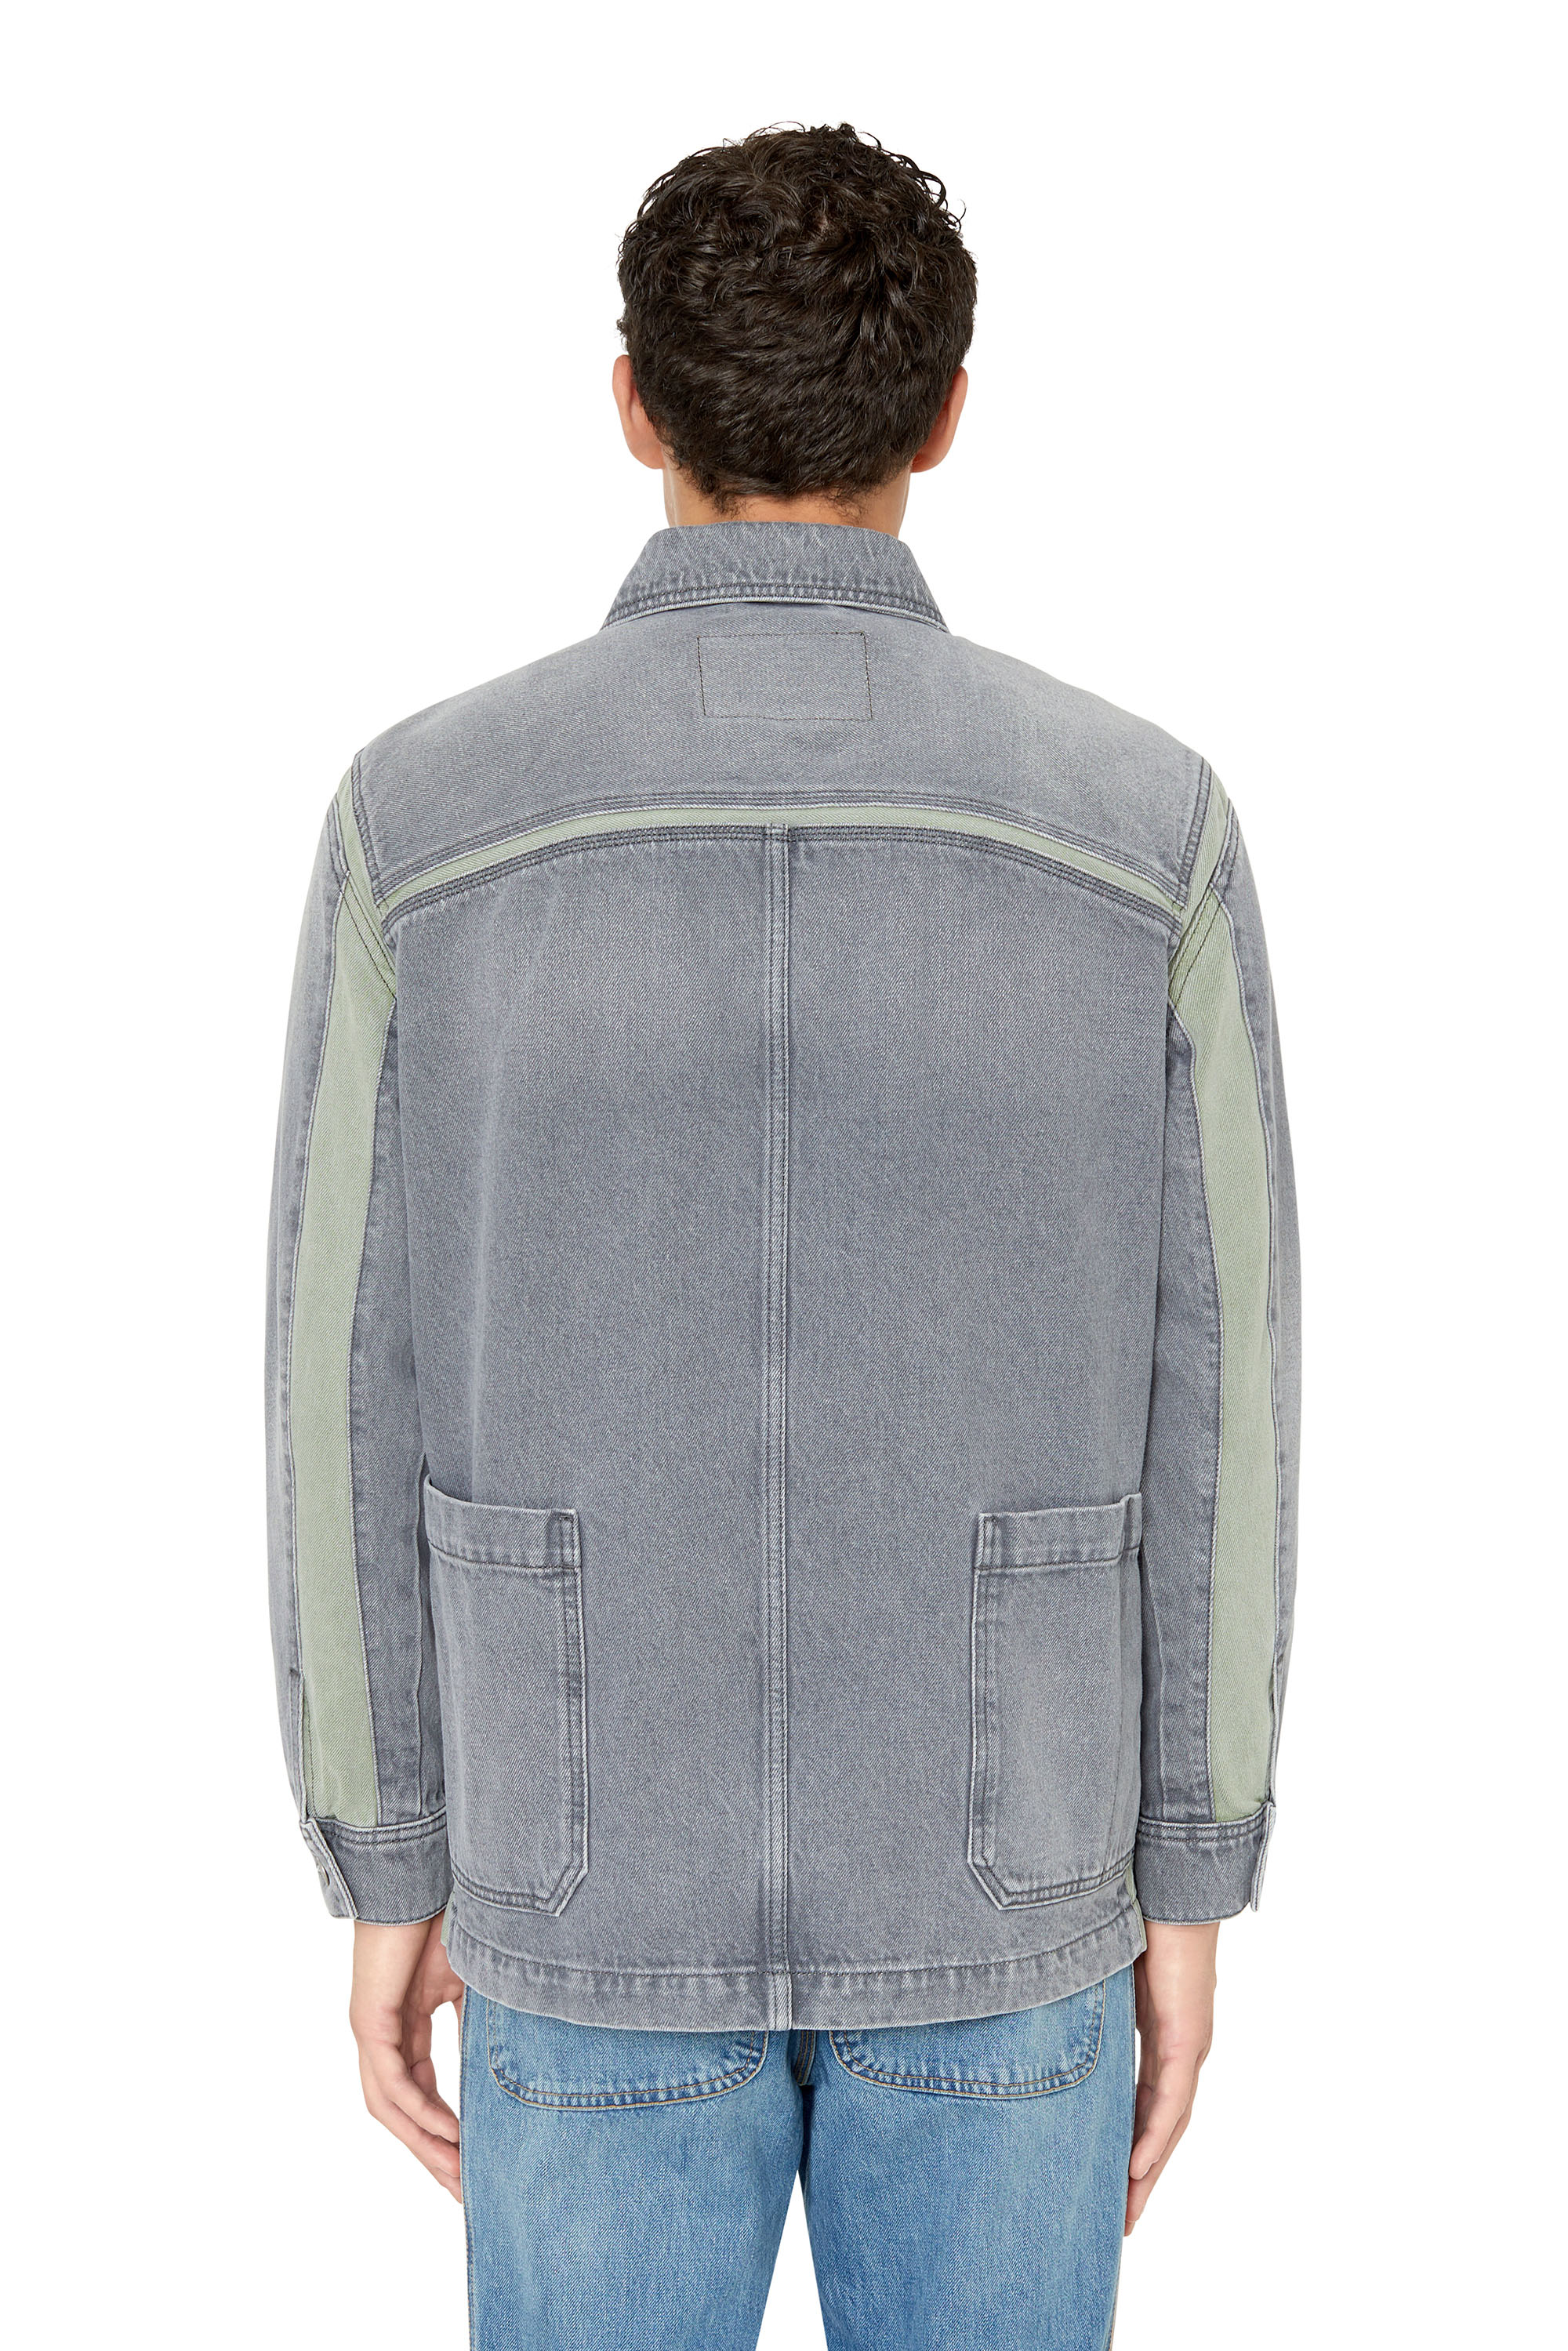 D-ROLK-SP4 Unisex: Workwear jacket with green inserts | Diesel